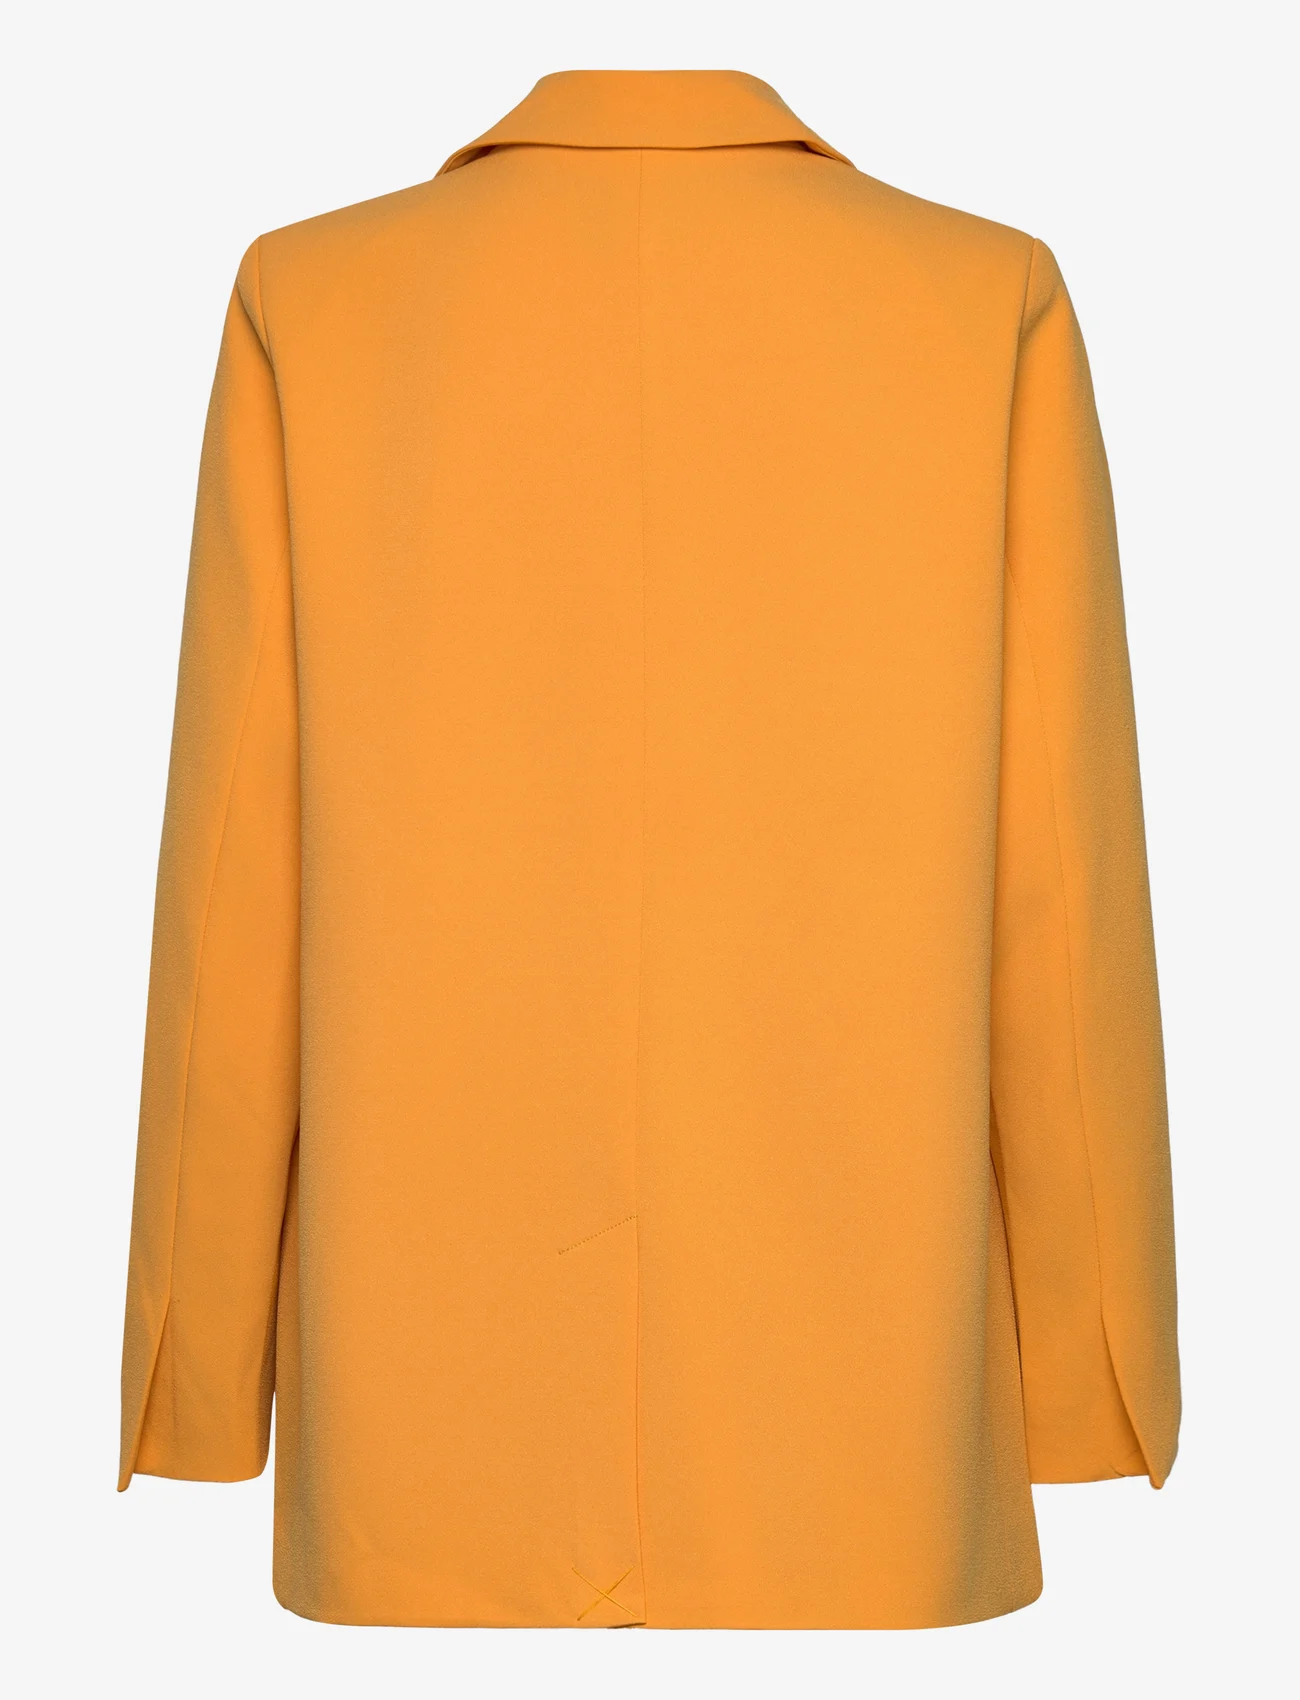 Coster Copenhagen - CC Heart ADA oversize blazer - party wear at outlet prices - orange - 1